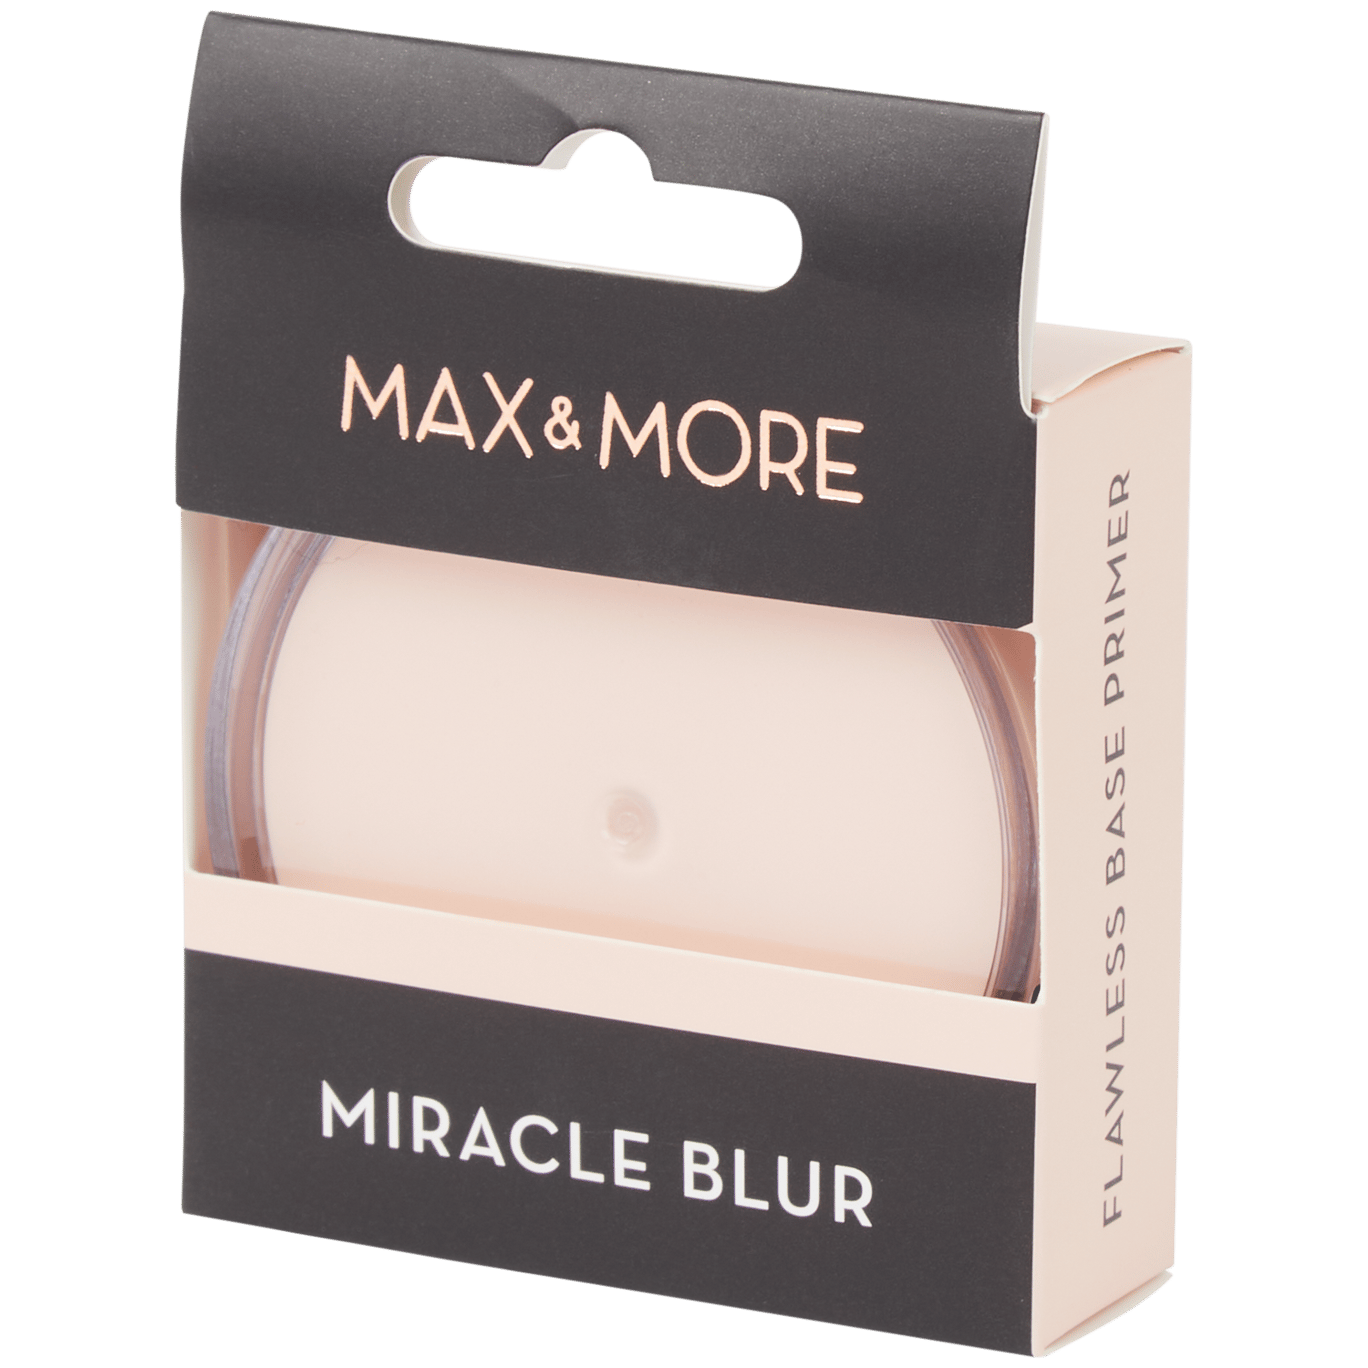 Preparador facial Max & More Miracle Blur